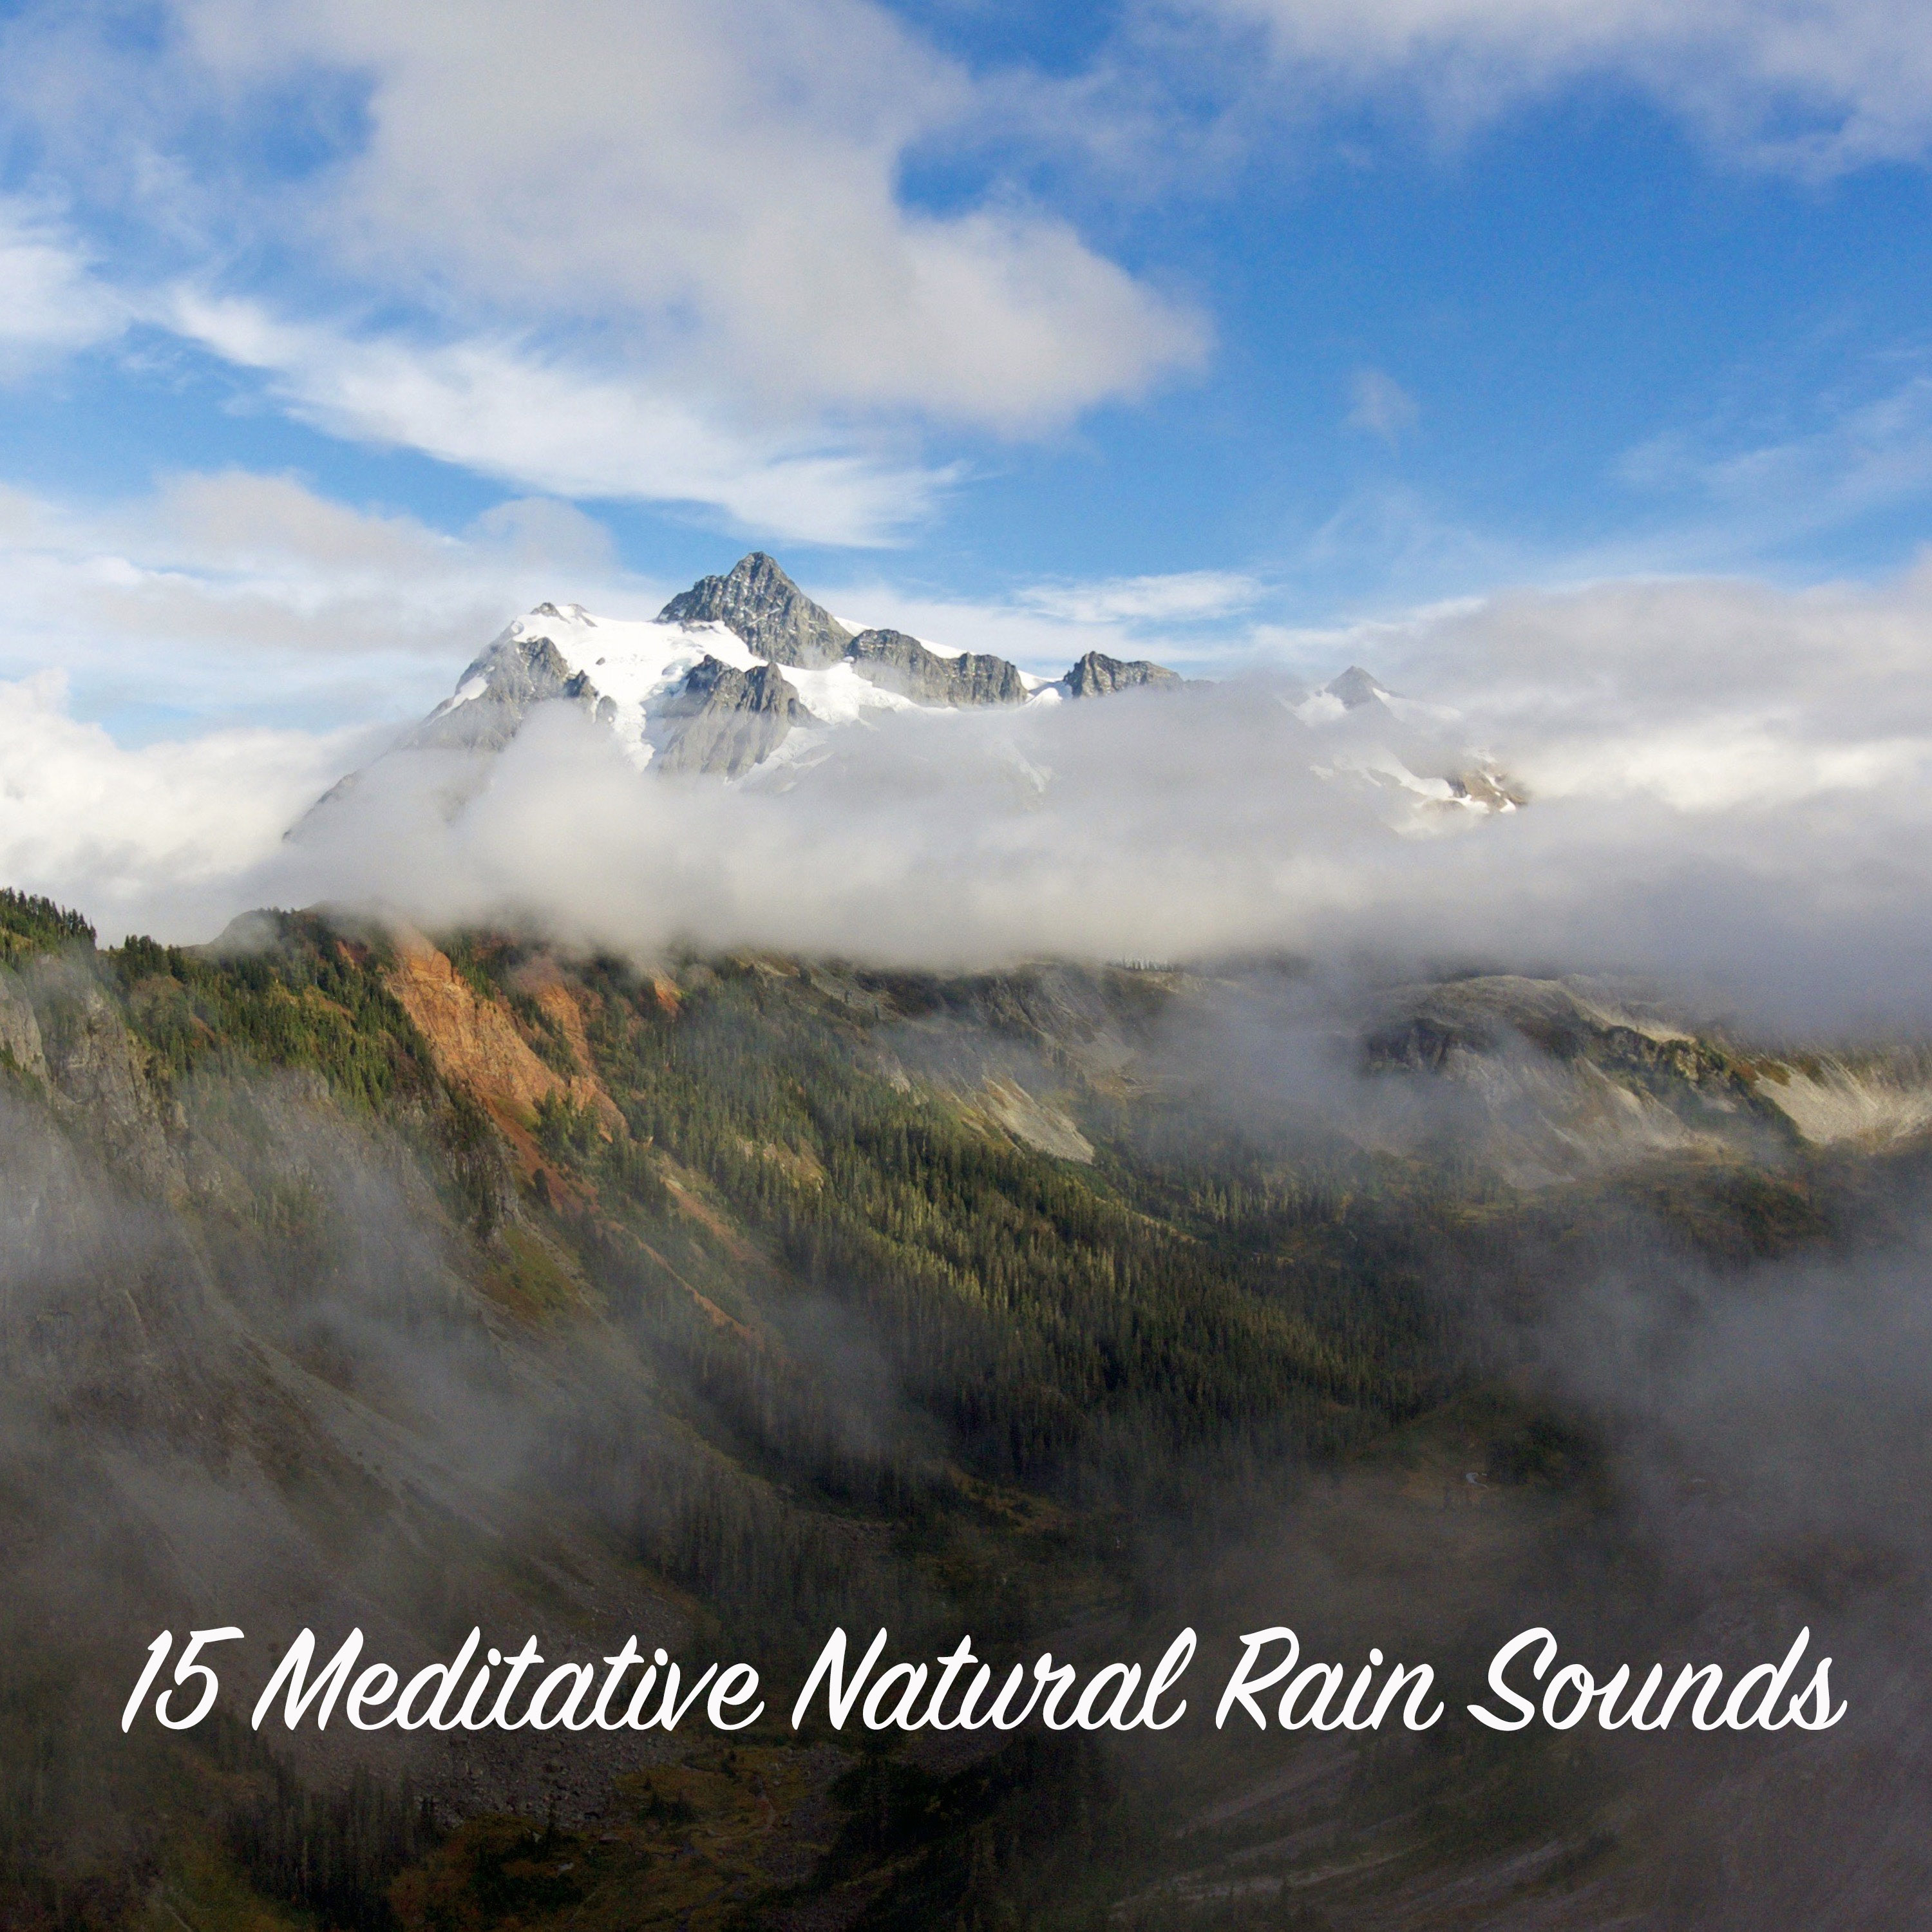 15 Meditative and Natural Rain Sounds